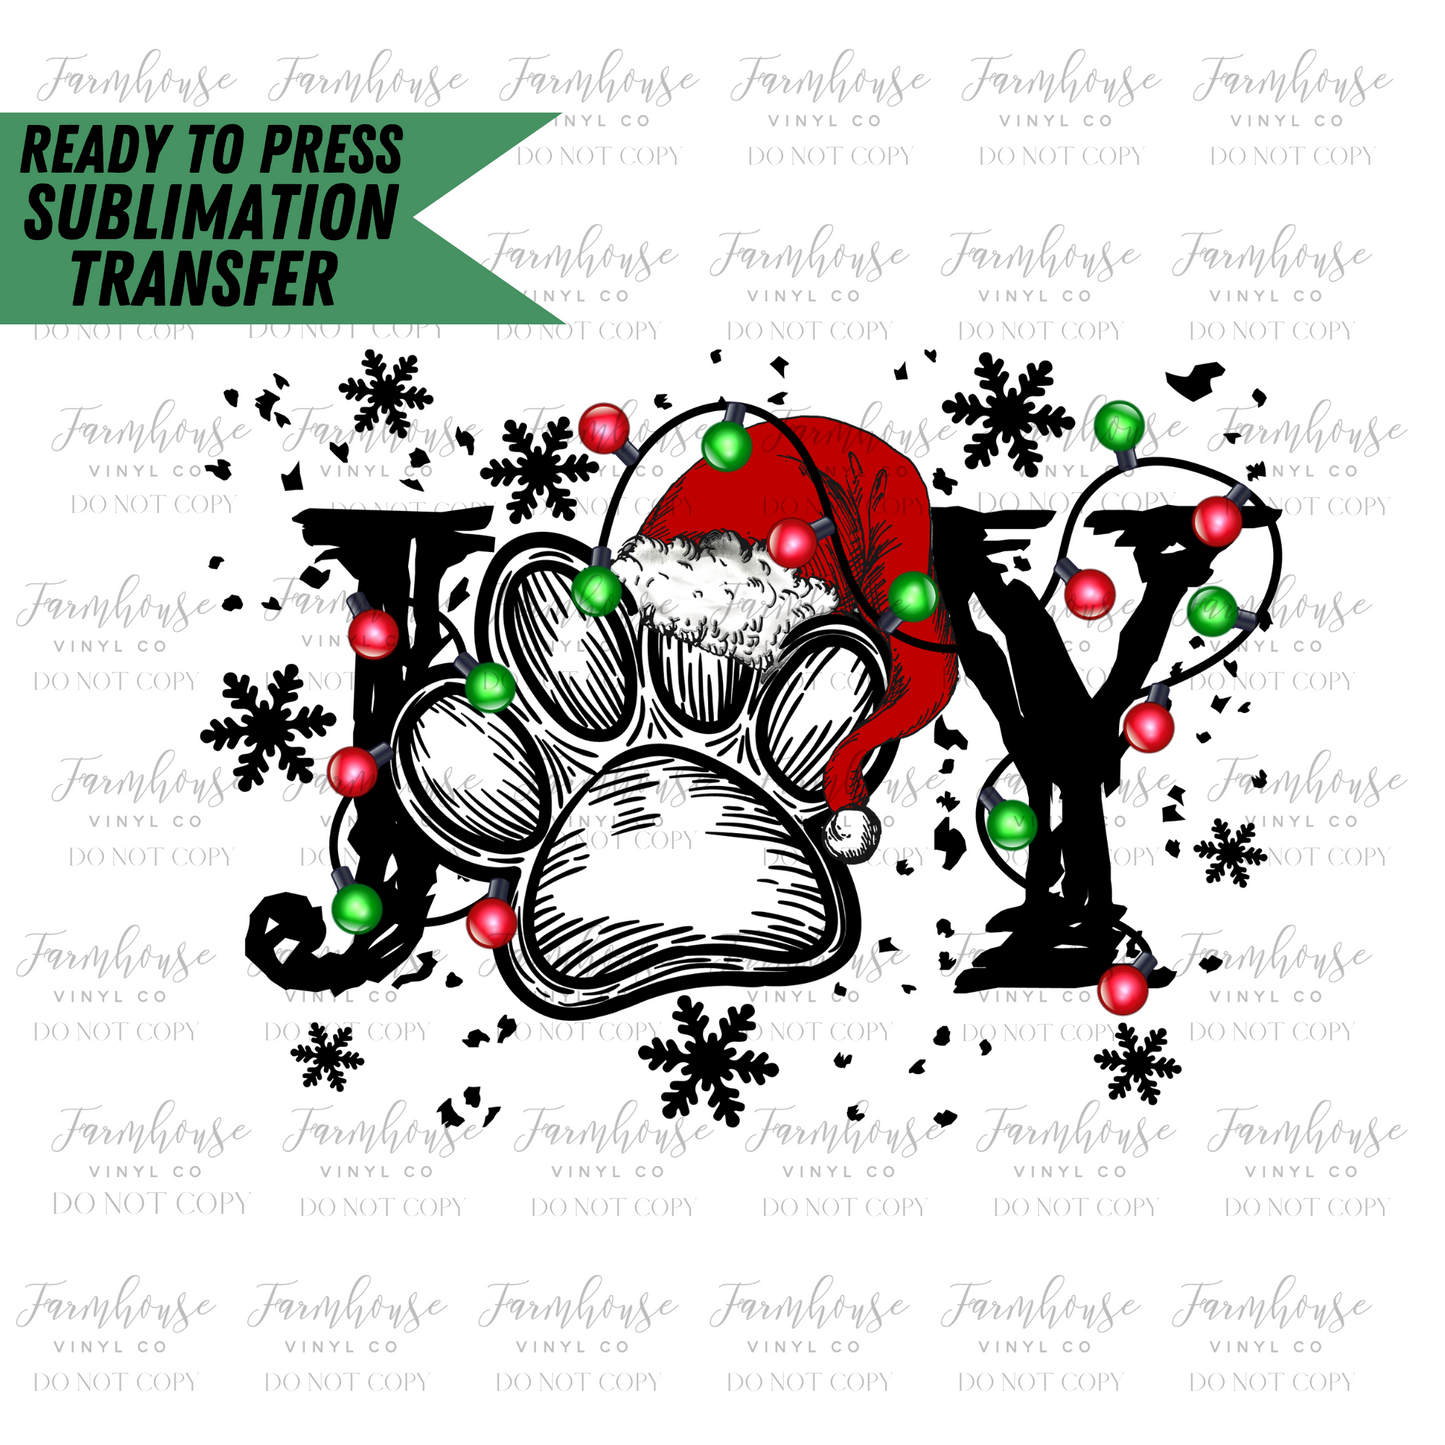 Joy Christmas Paw Prints Ready To Press Sublimation Transfer - Farmhouse Vinyl Co